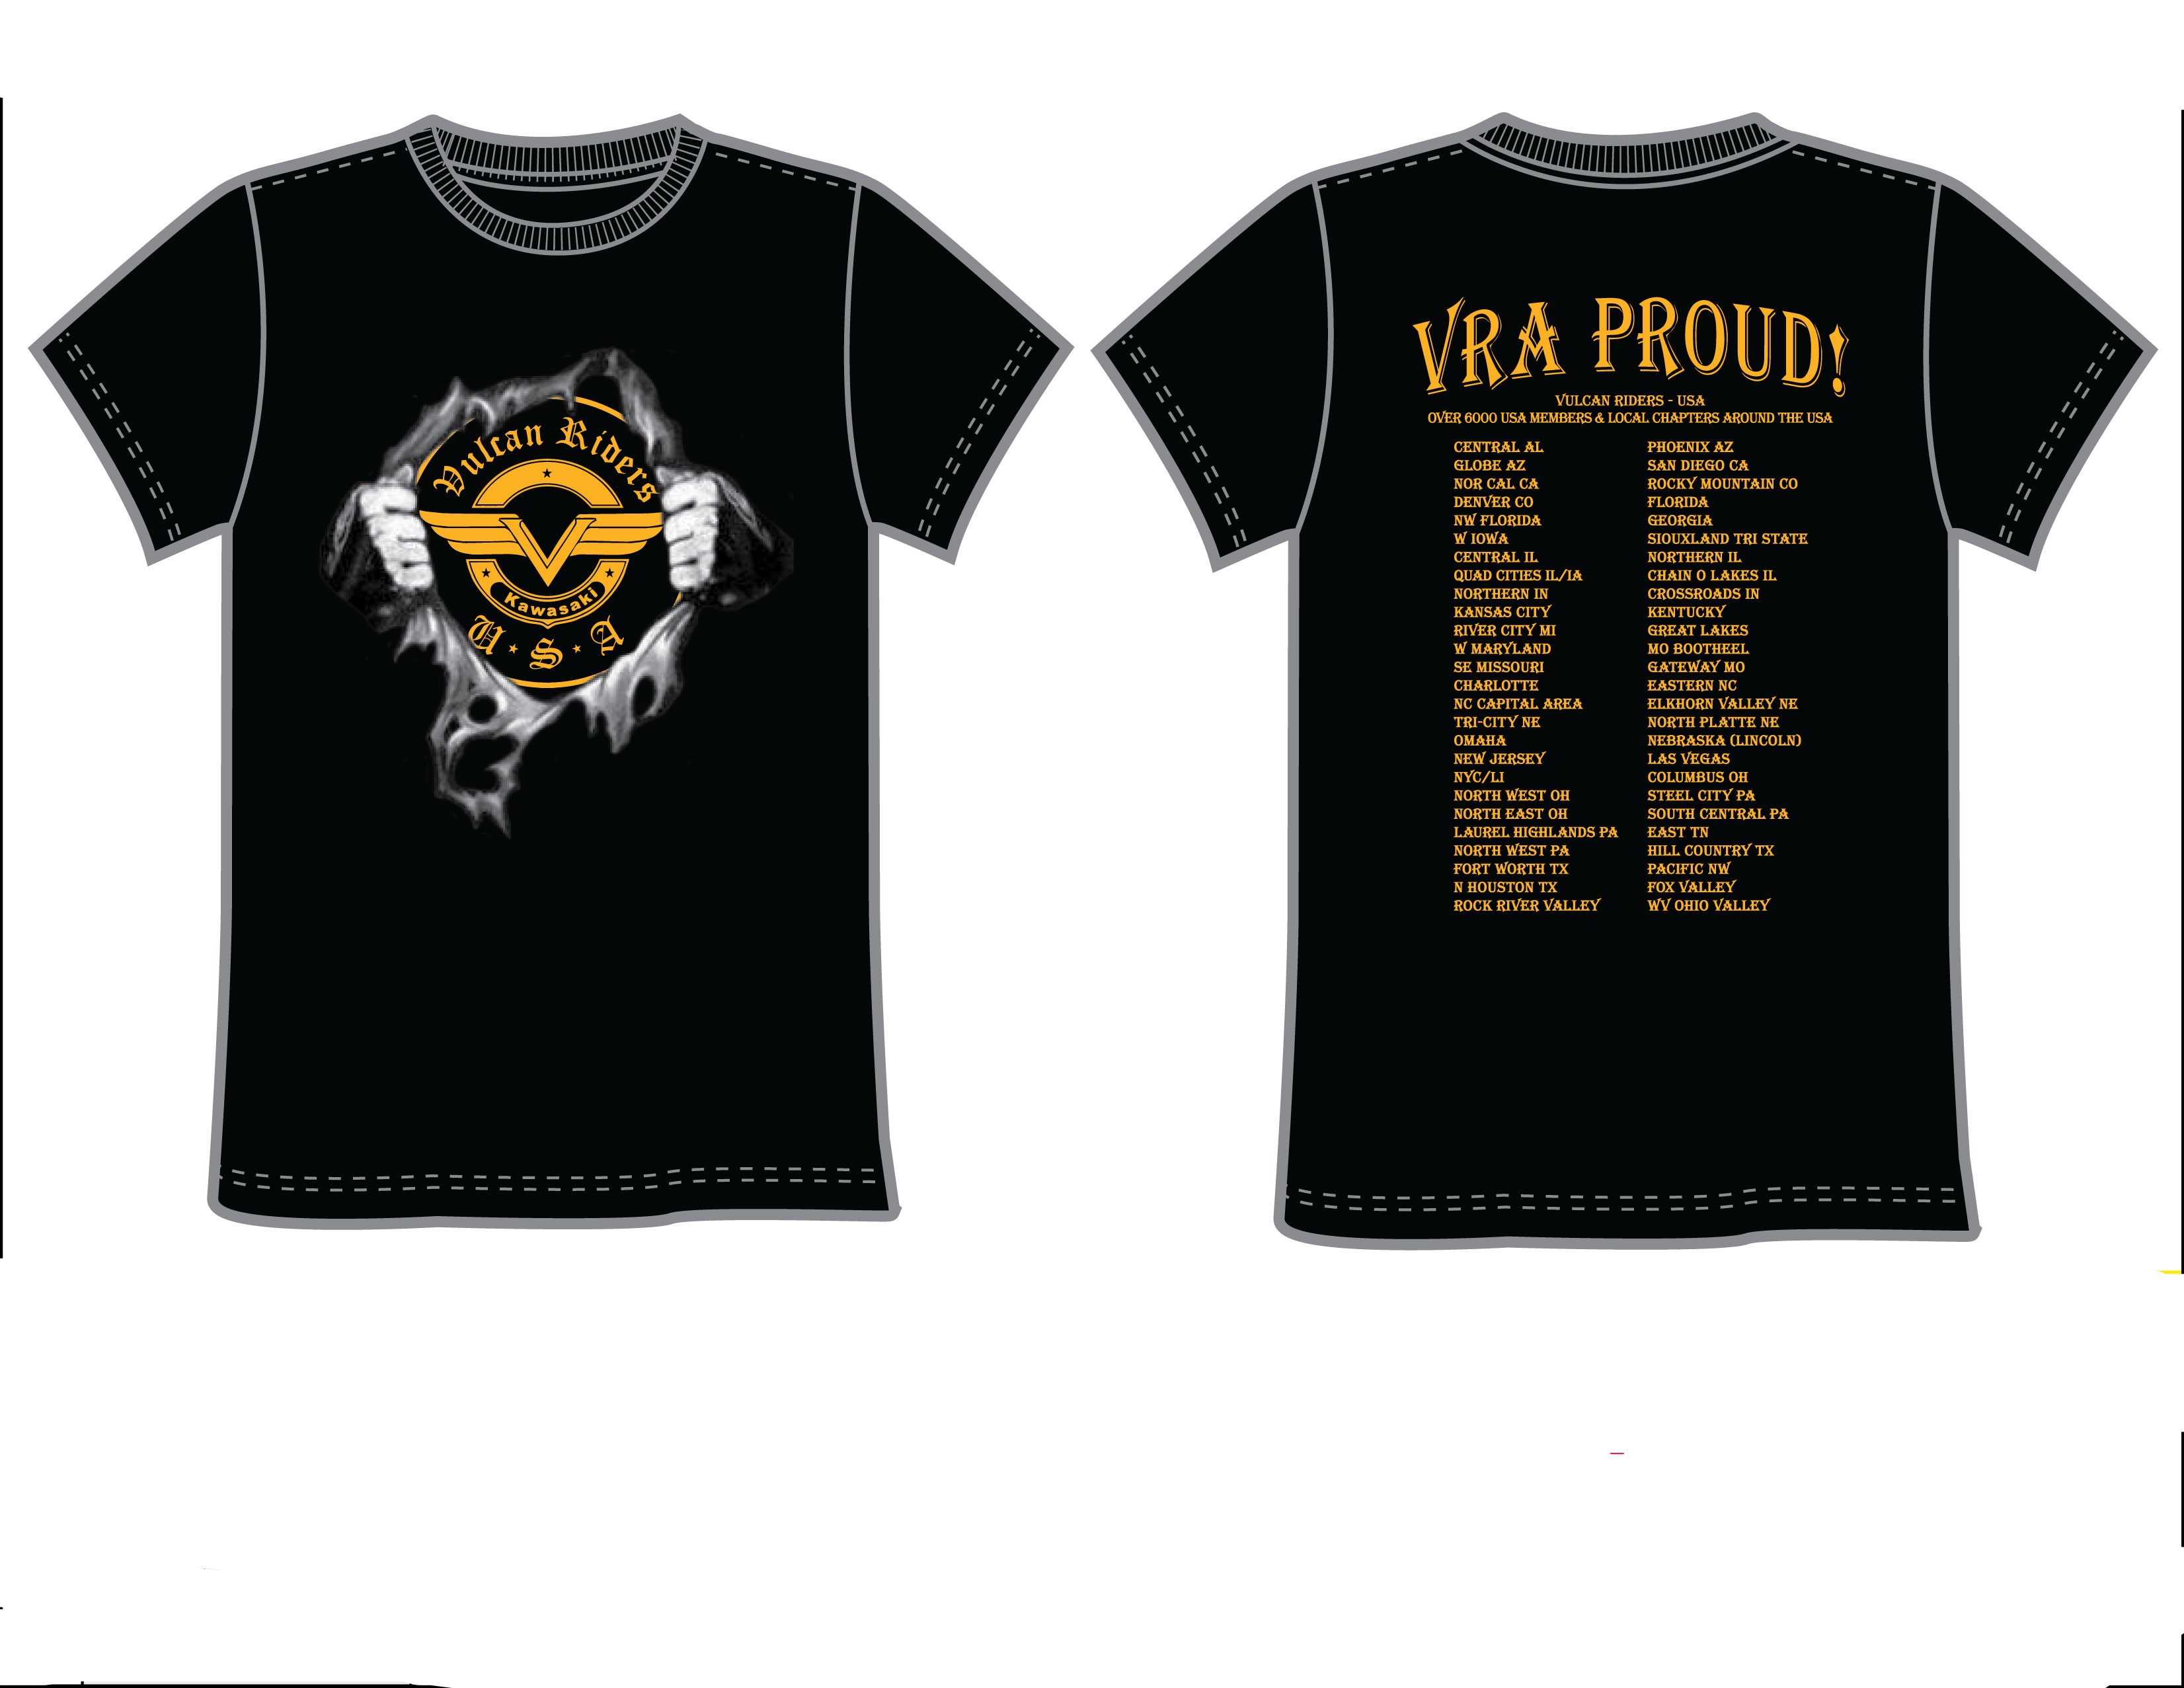 Vra Proud T shirts